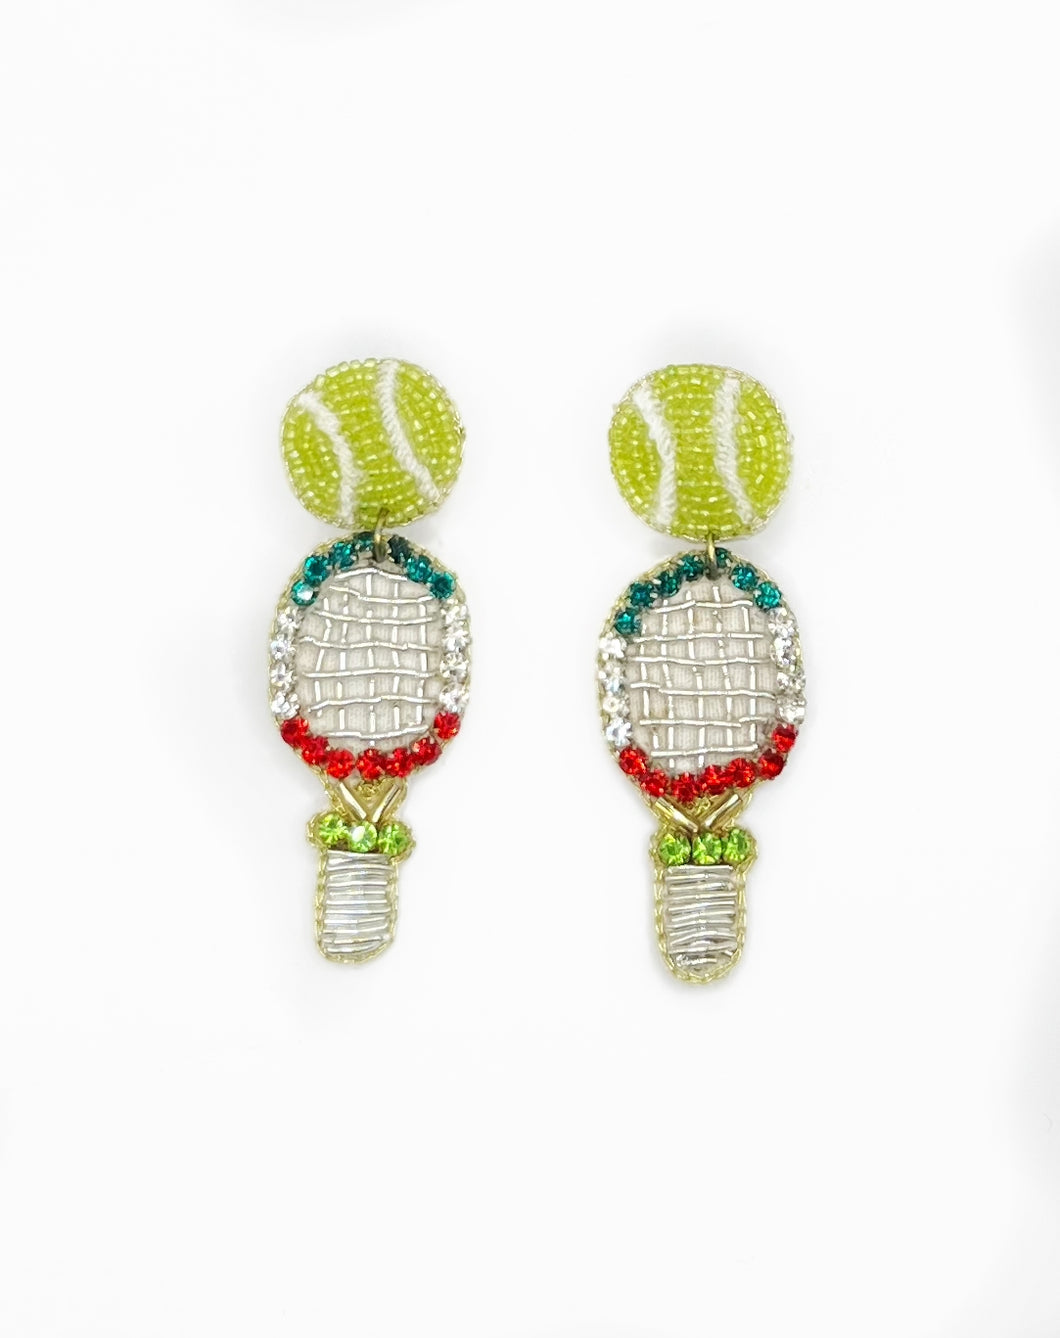 Tennis Racket Beaded and Crystal Statement Earrings, sports, USTA, handmade earrings, racket, country club style